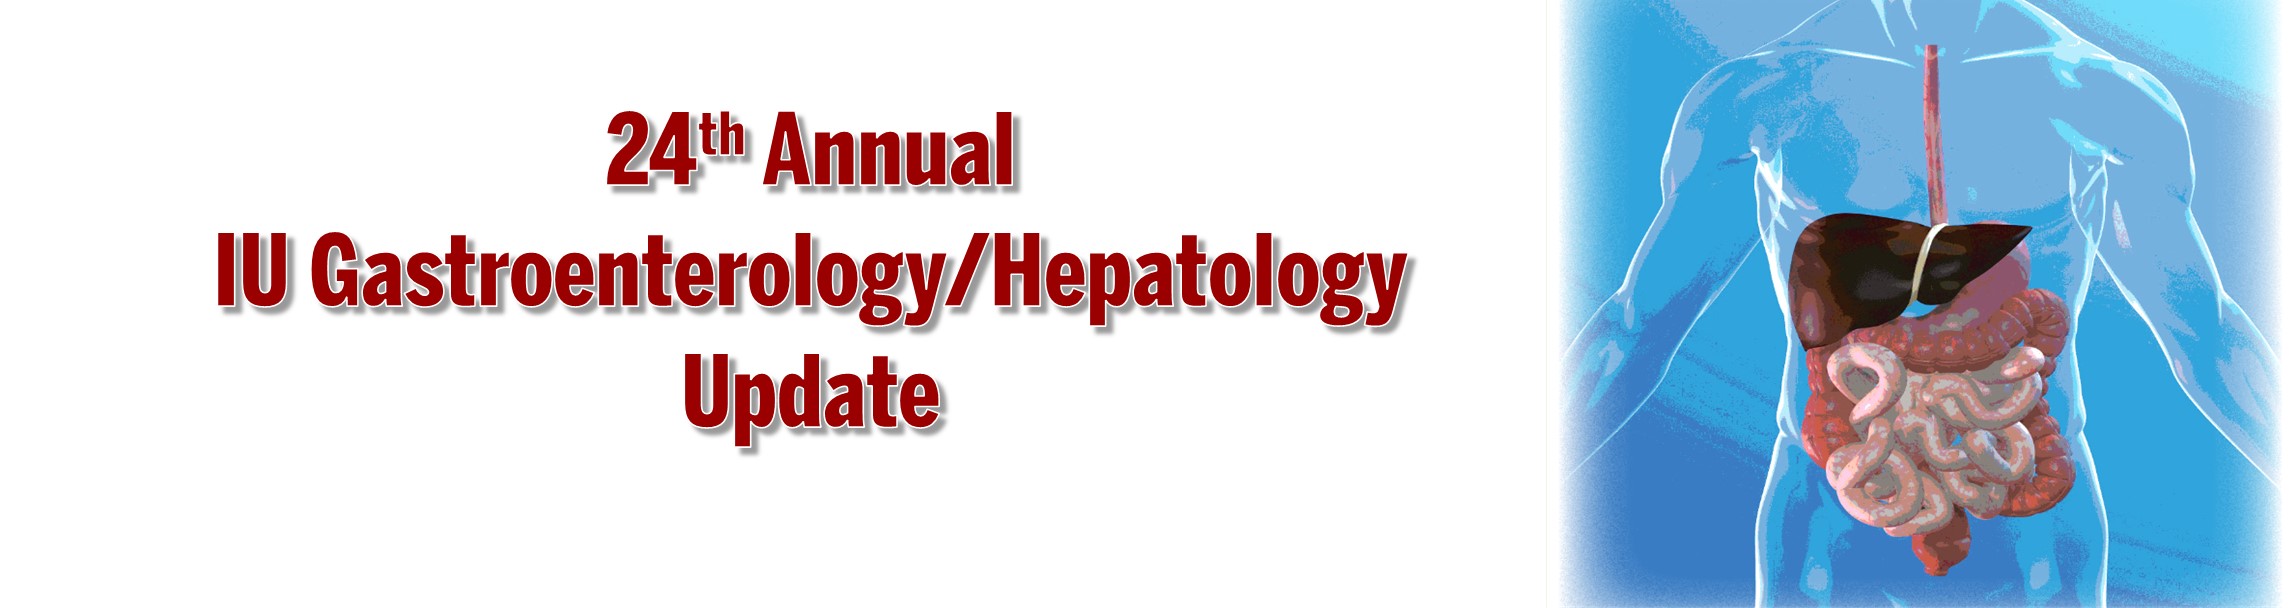 24th Annual IU Gastroenterology/Hepatology Update Banner